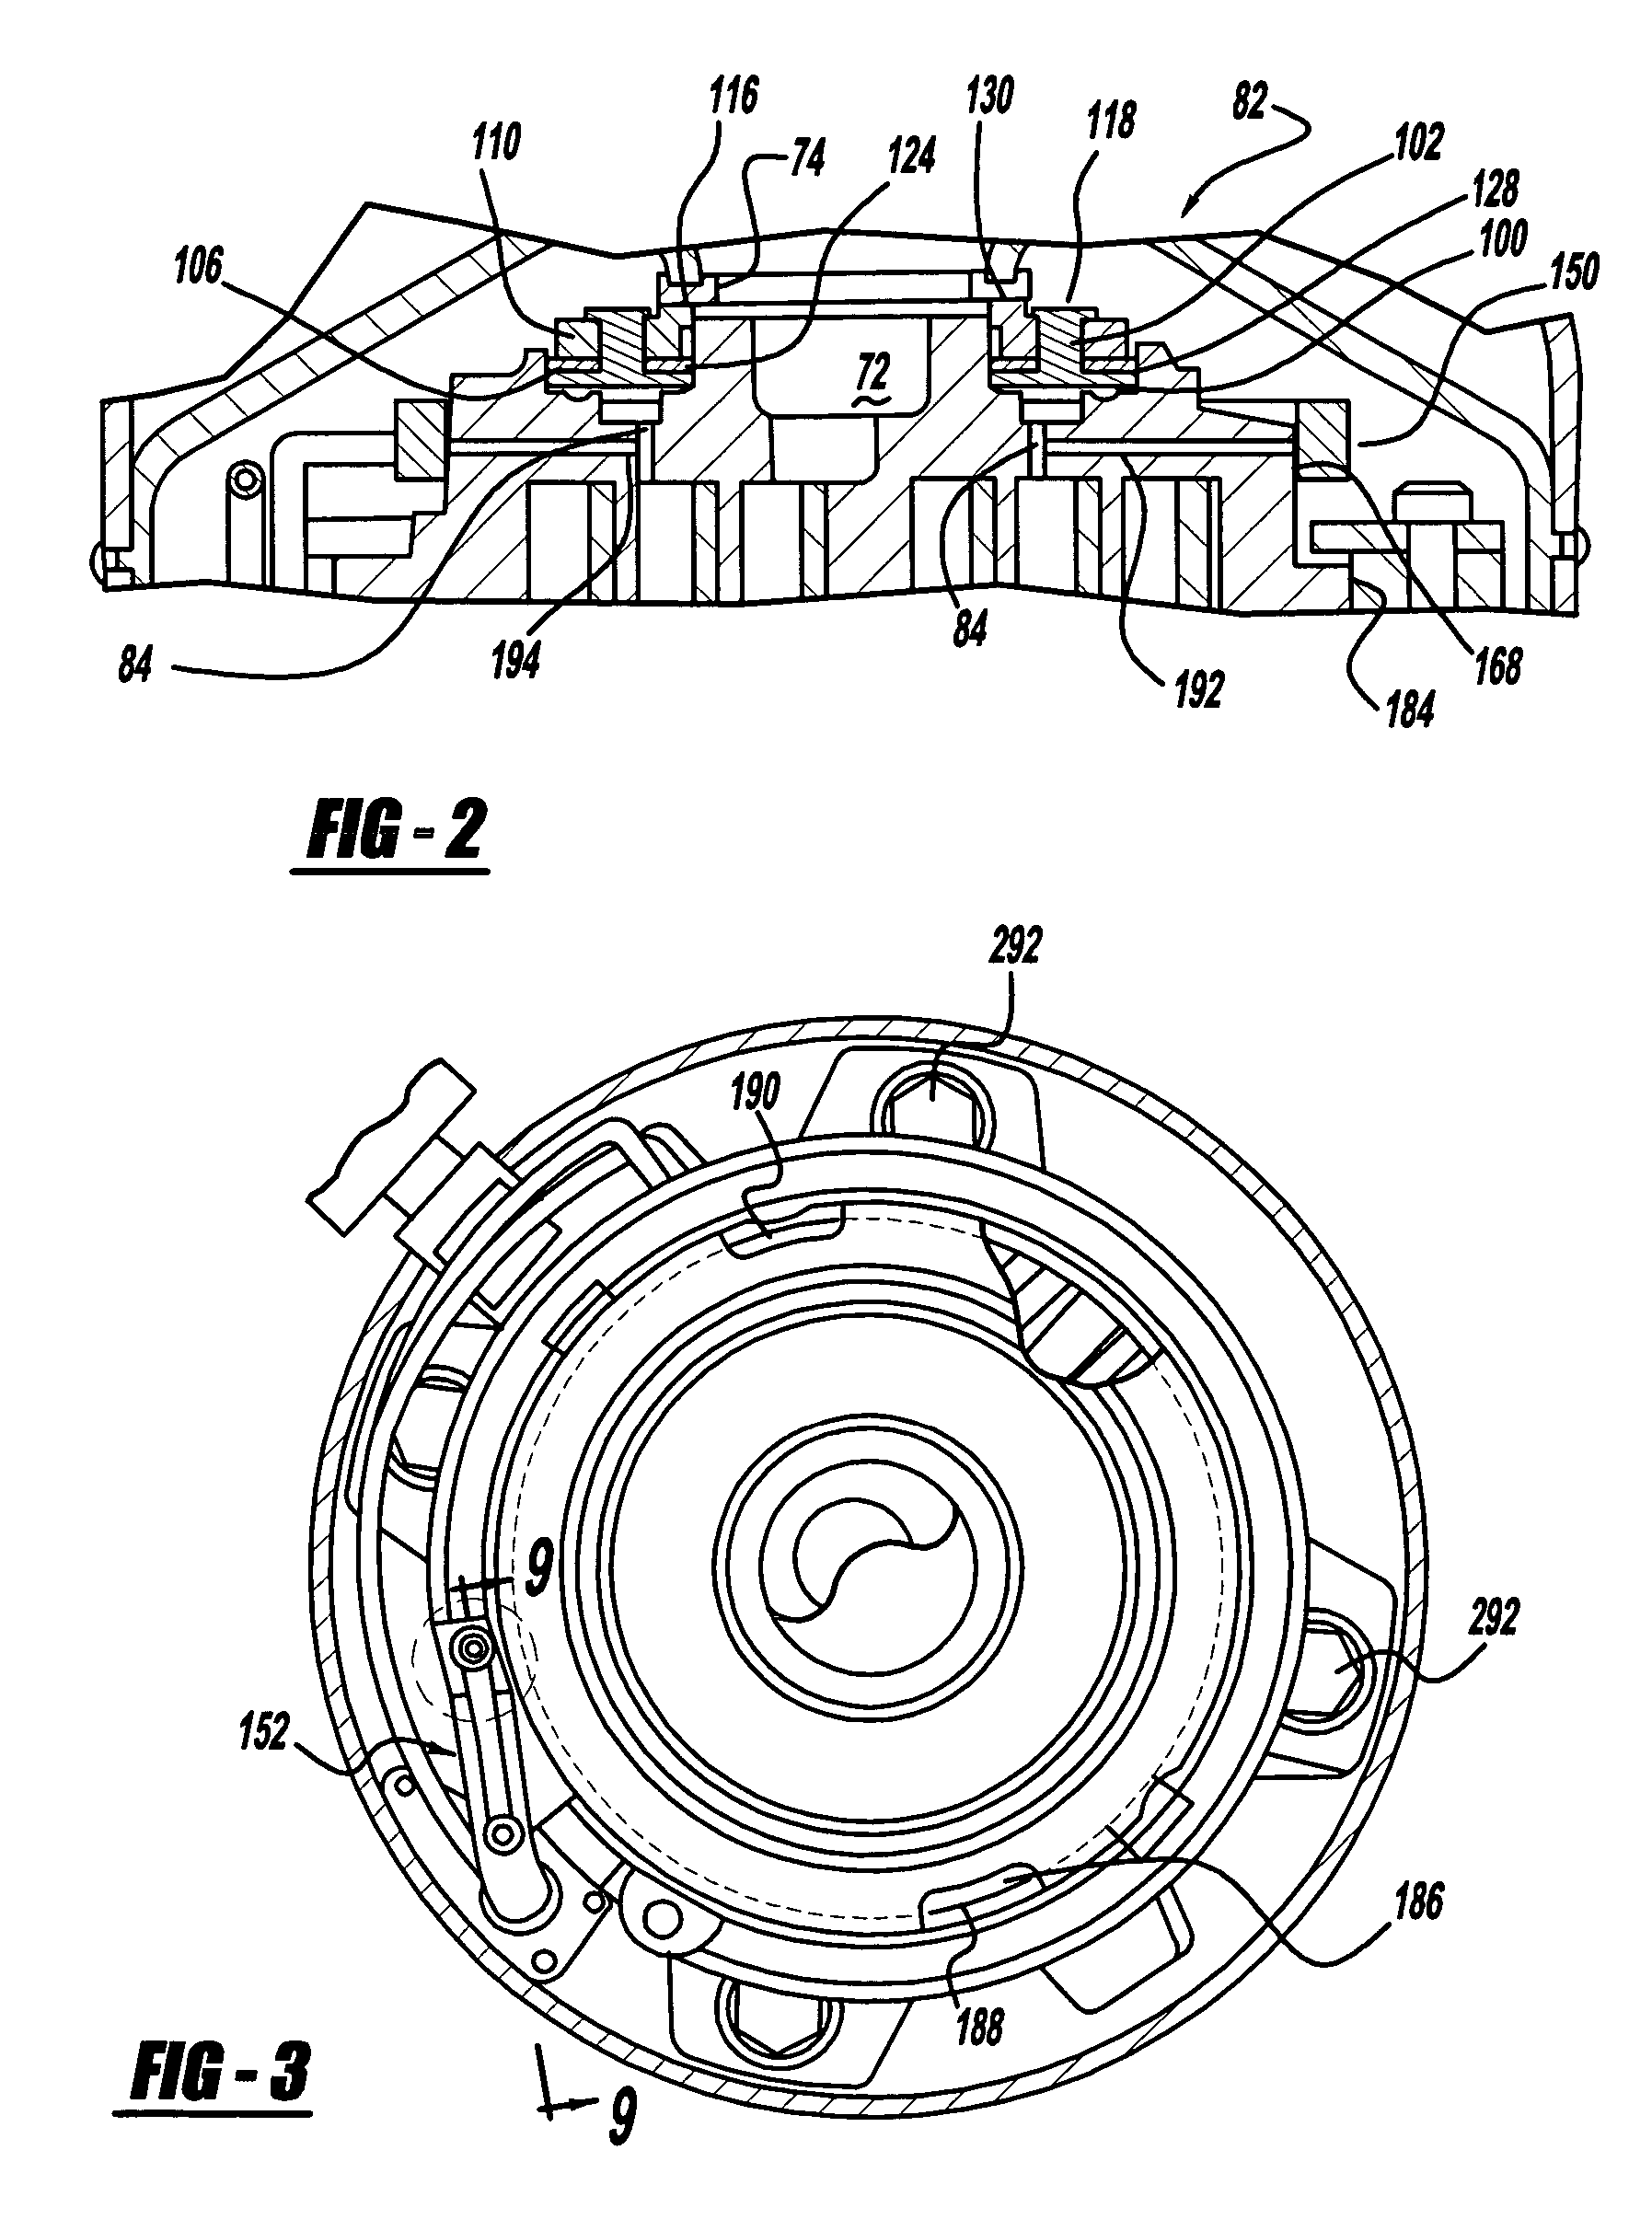 Capacity modulated scroll compressor